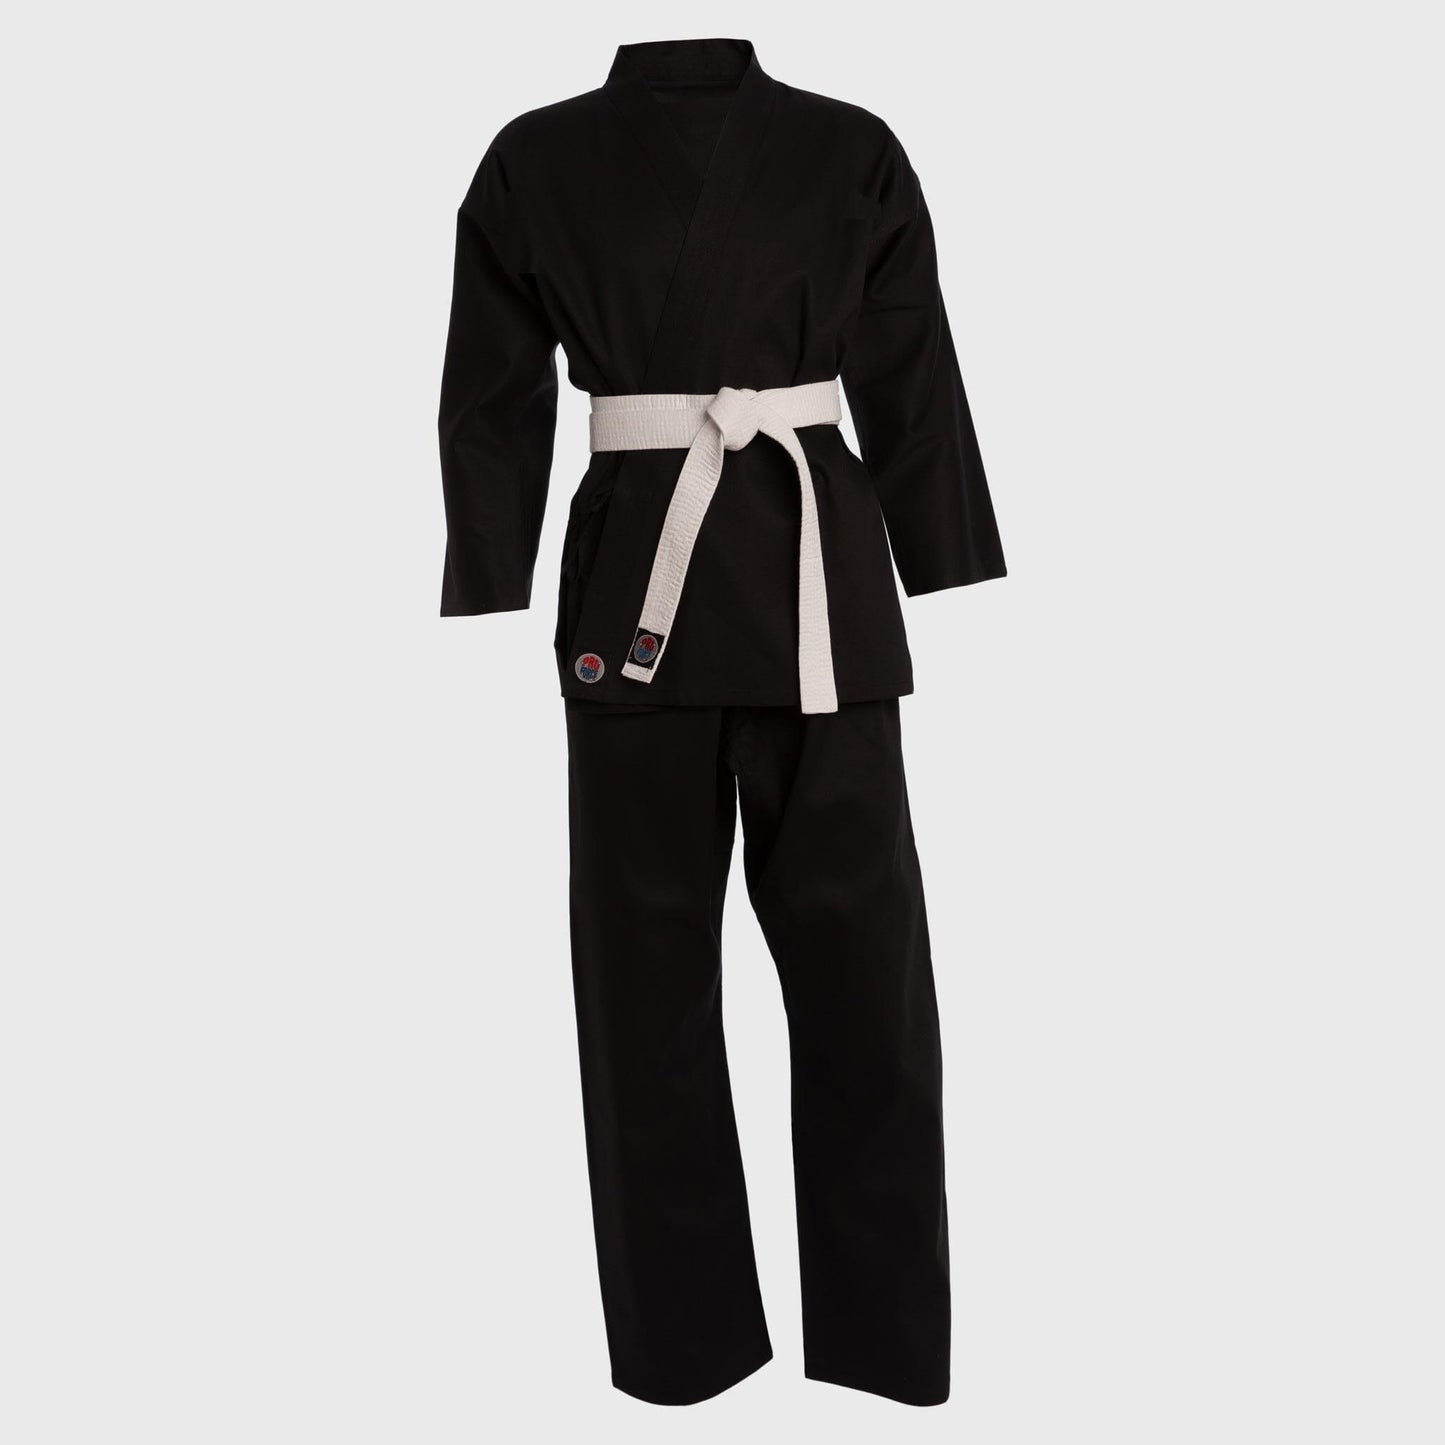 ProForce 5 oz. Classic Karate Uniform (Elastic Drawstring) - 60/40 Blend - With Free White Belt - Violent Art Shop